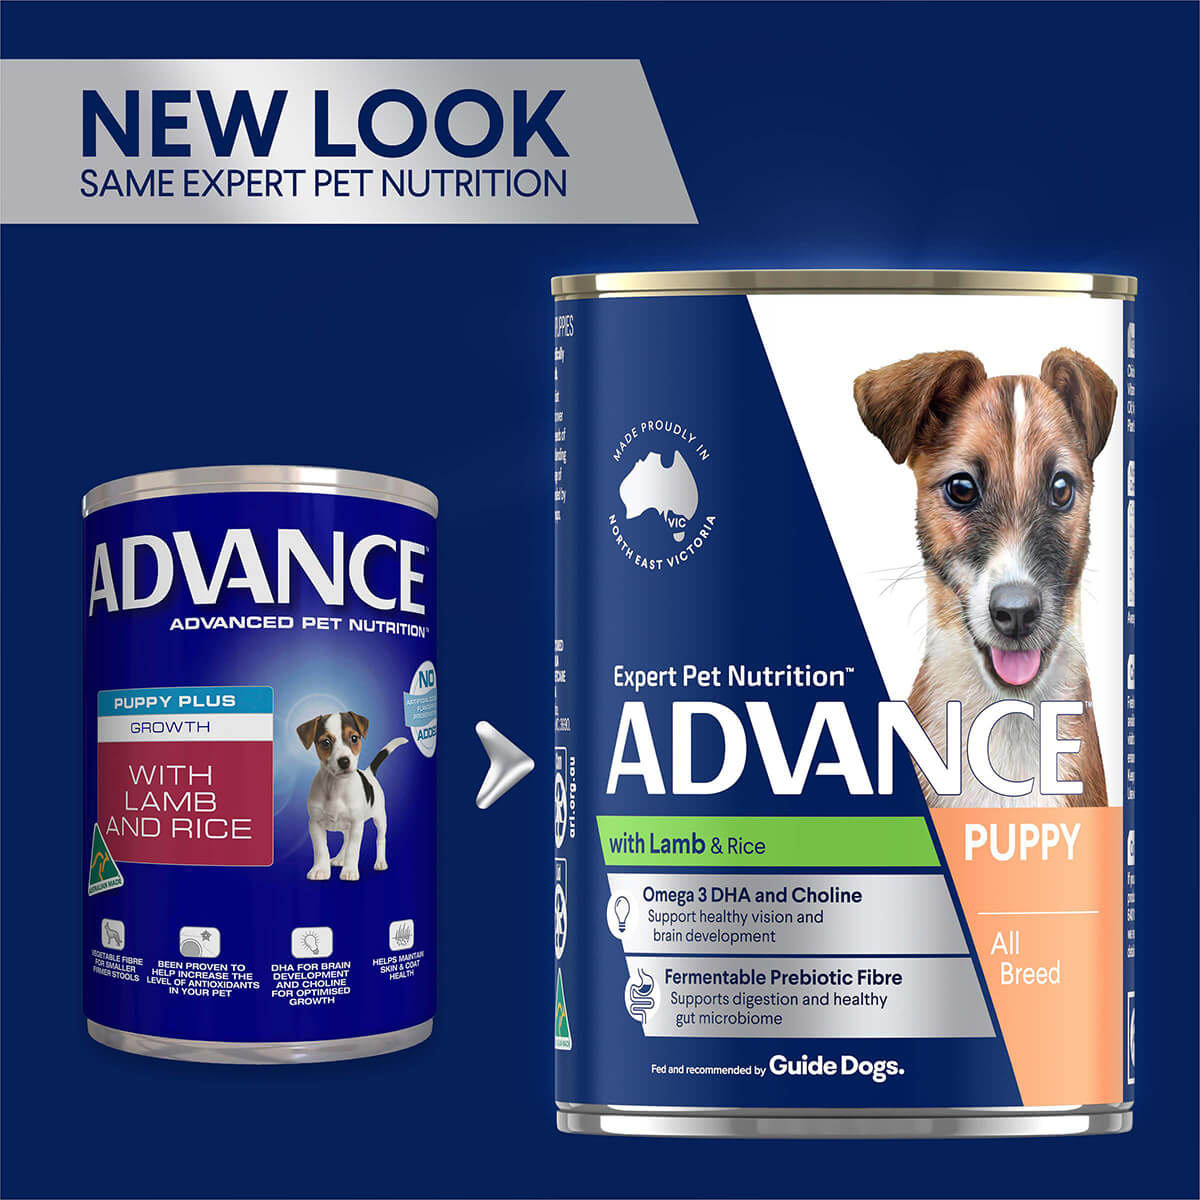 Advance Growth Puppy Lamb & Rice Wet Dog Food 410g